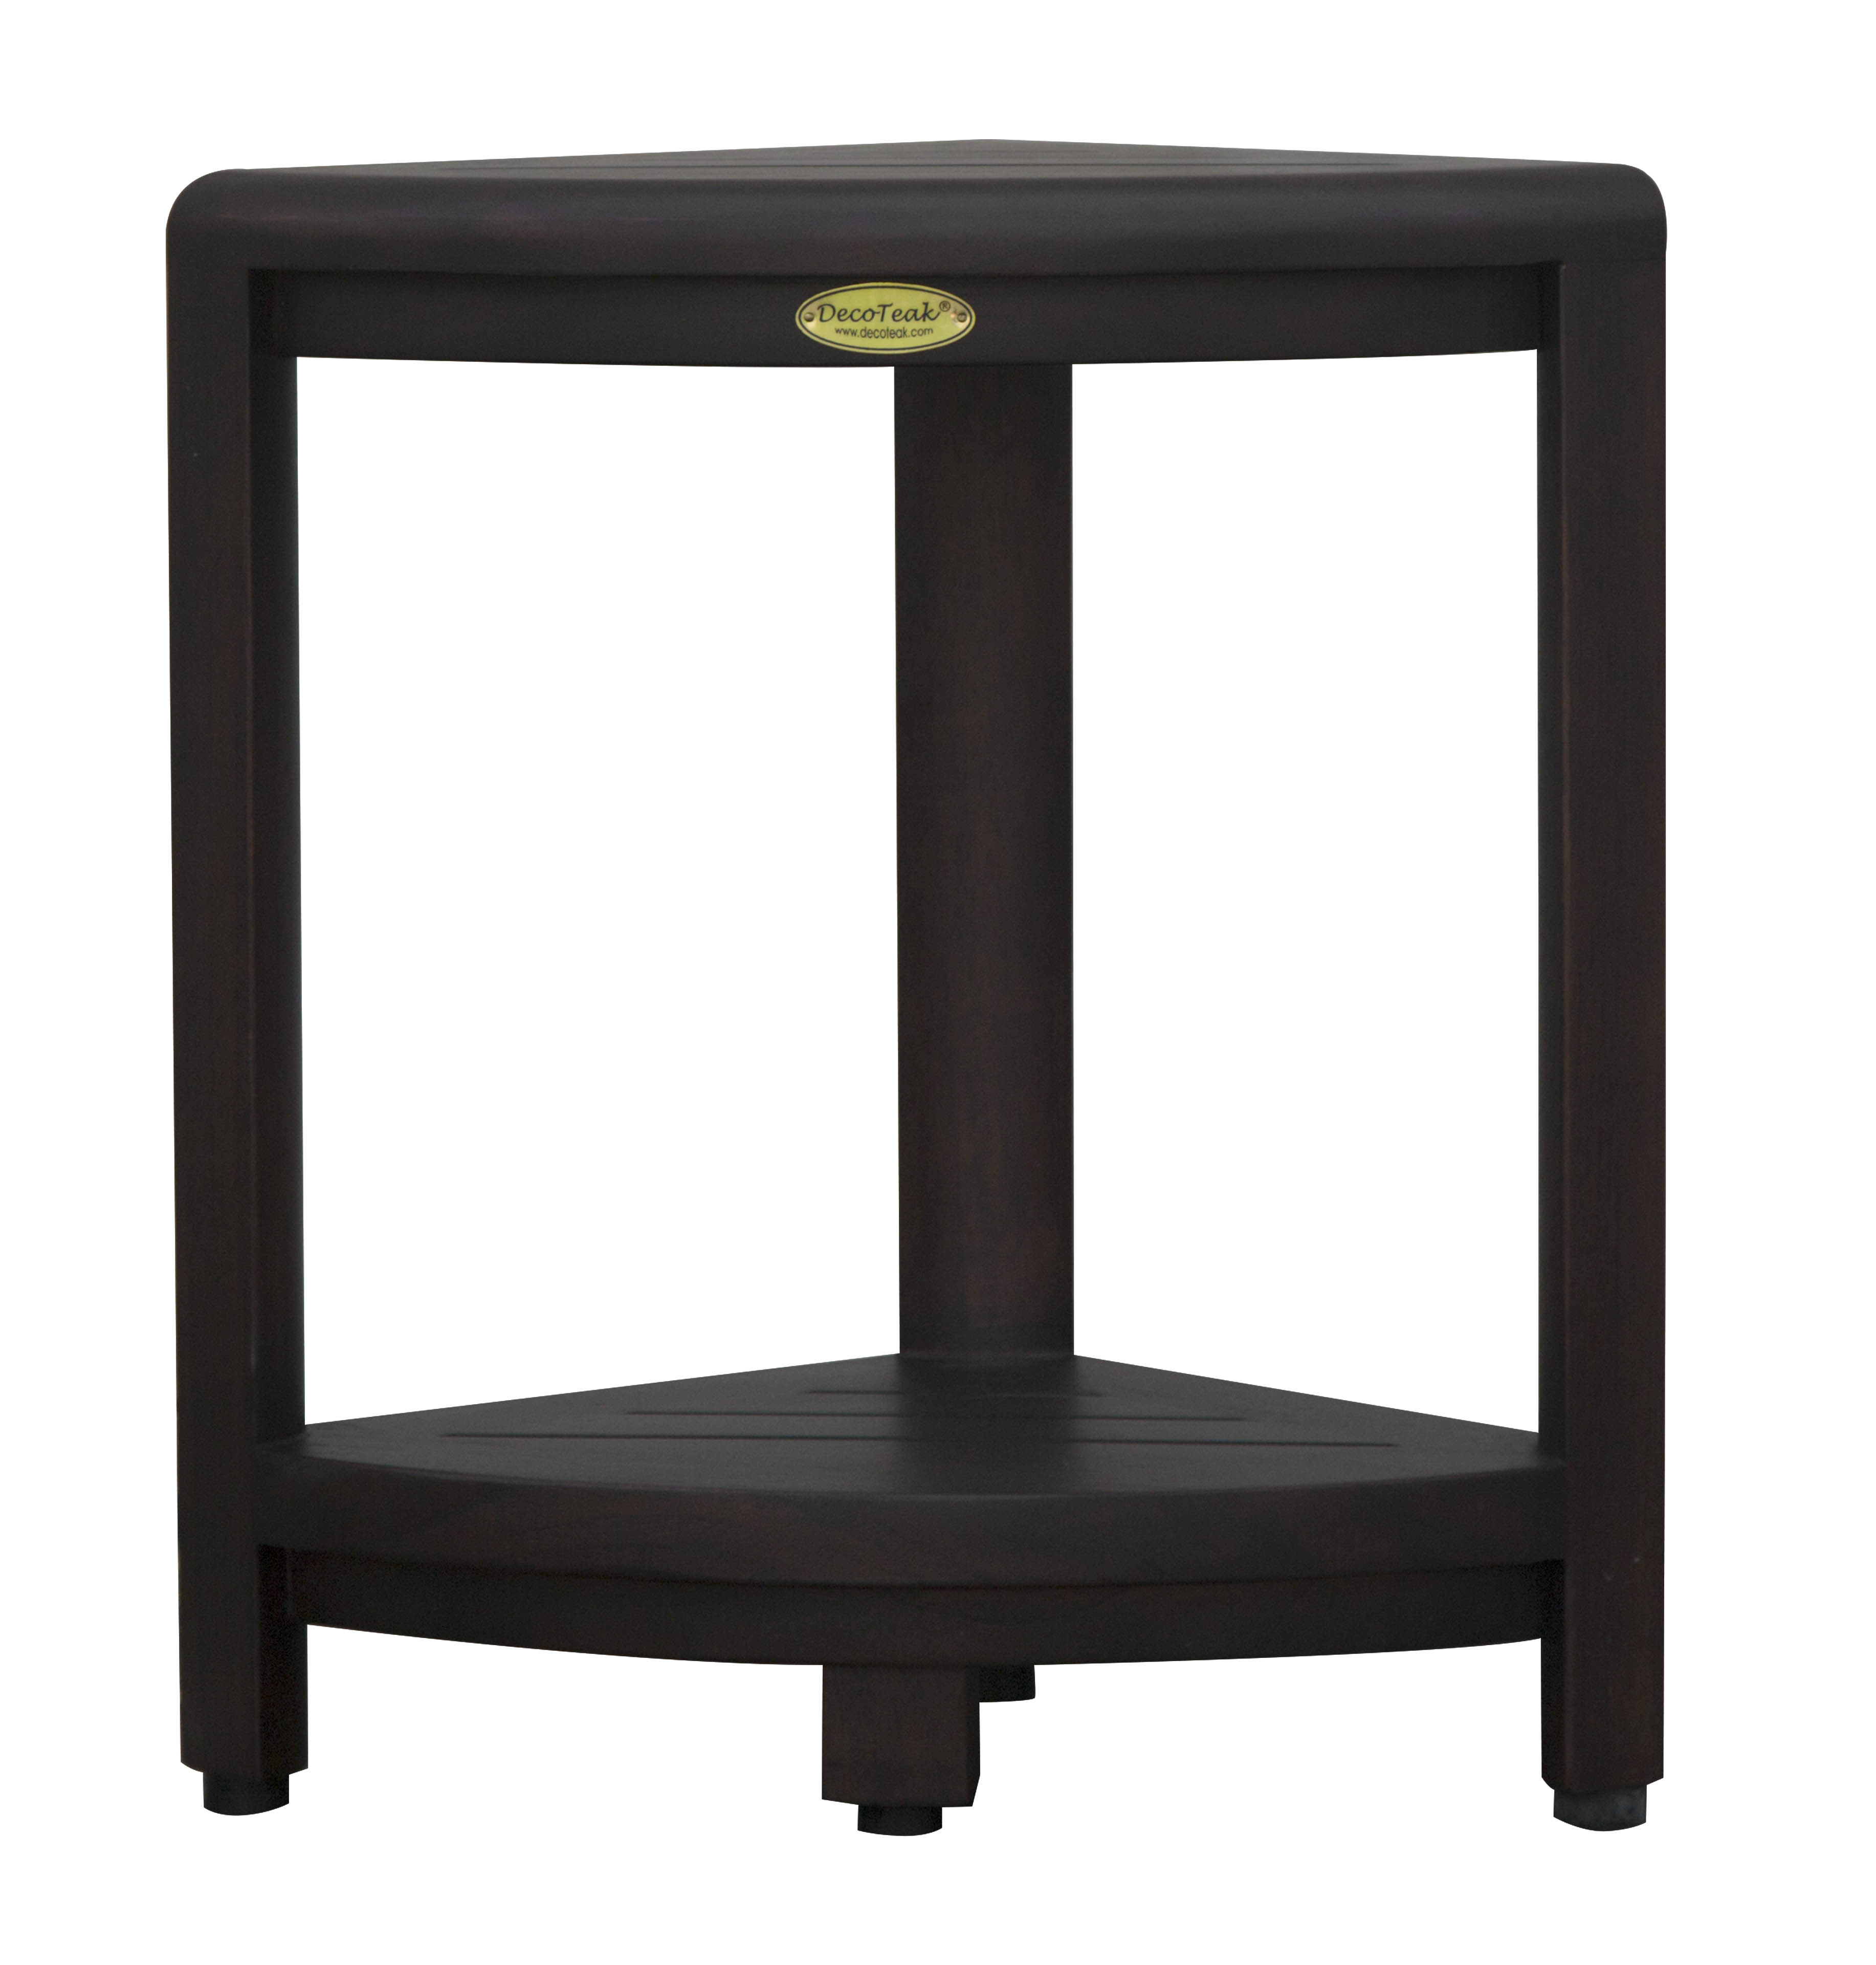 DecoTeak® SnazzyCorner® 18"H Teak Wood Corner Shower Bench with Shelf in Woodland Brown Finish